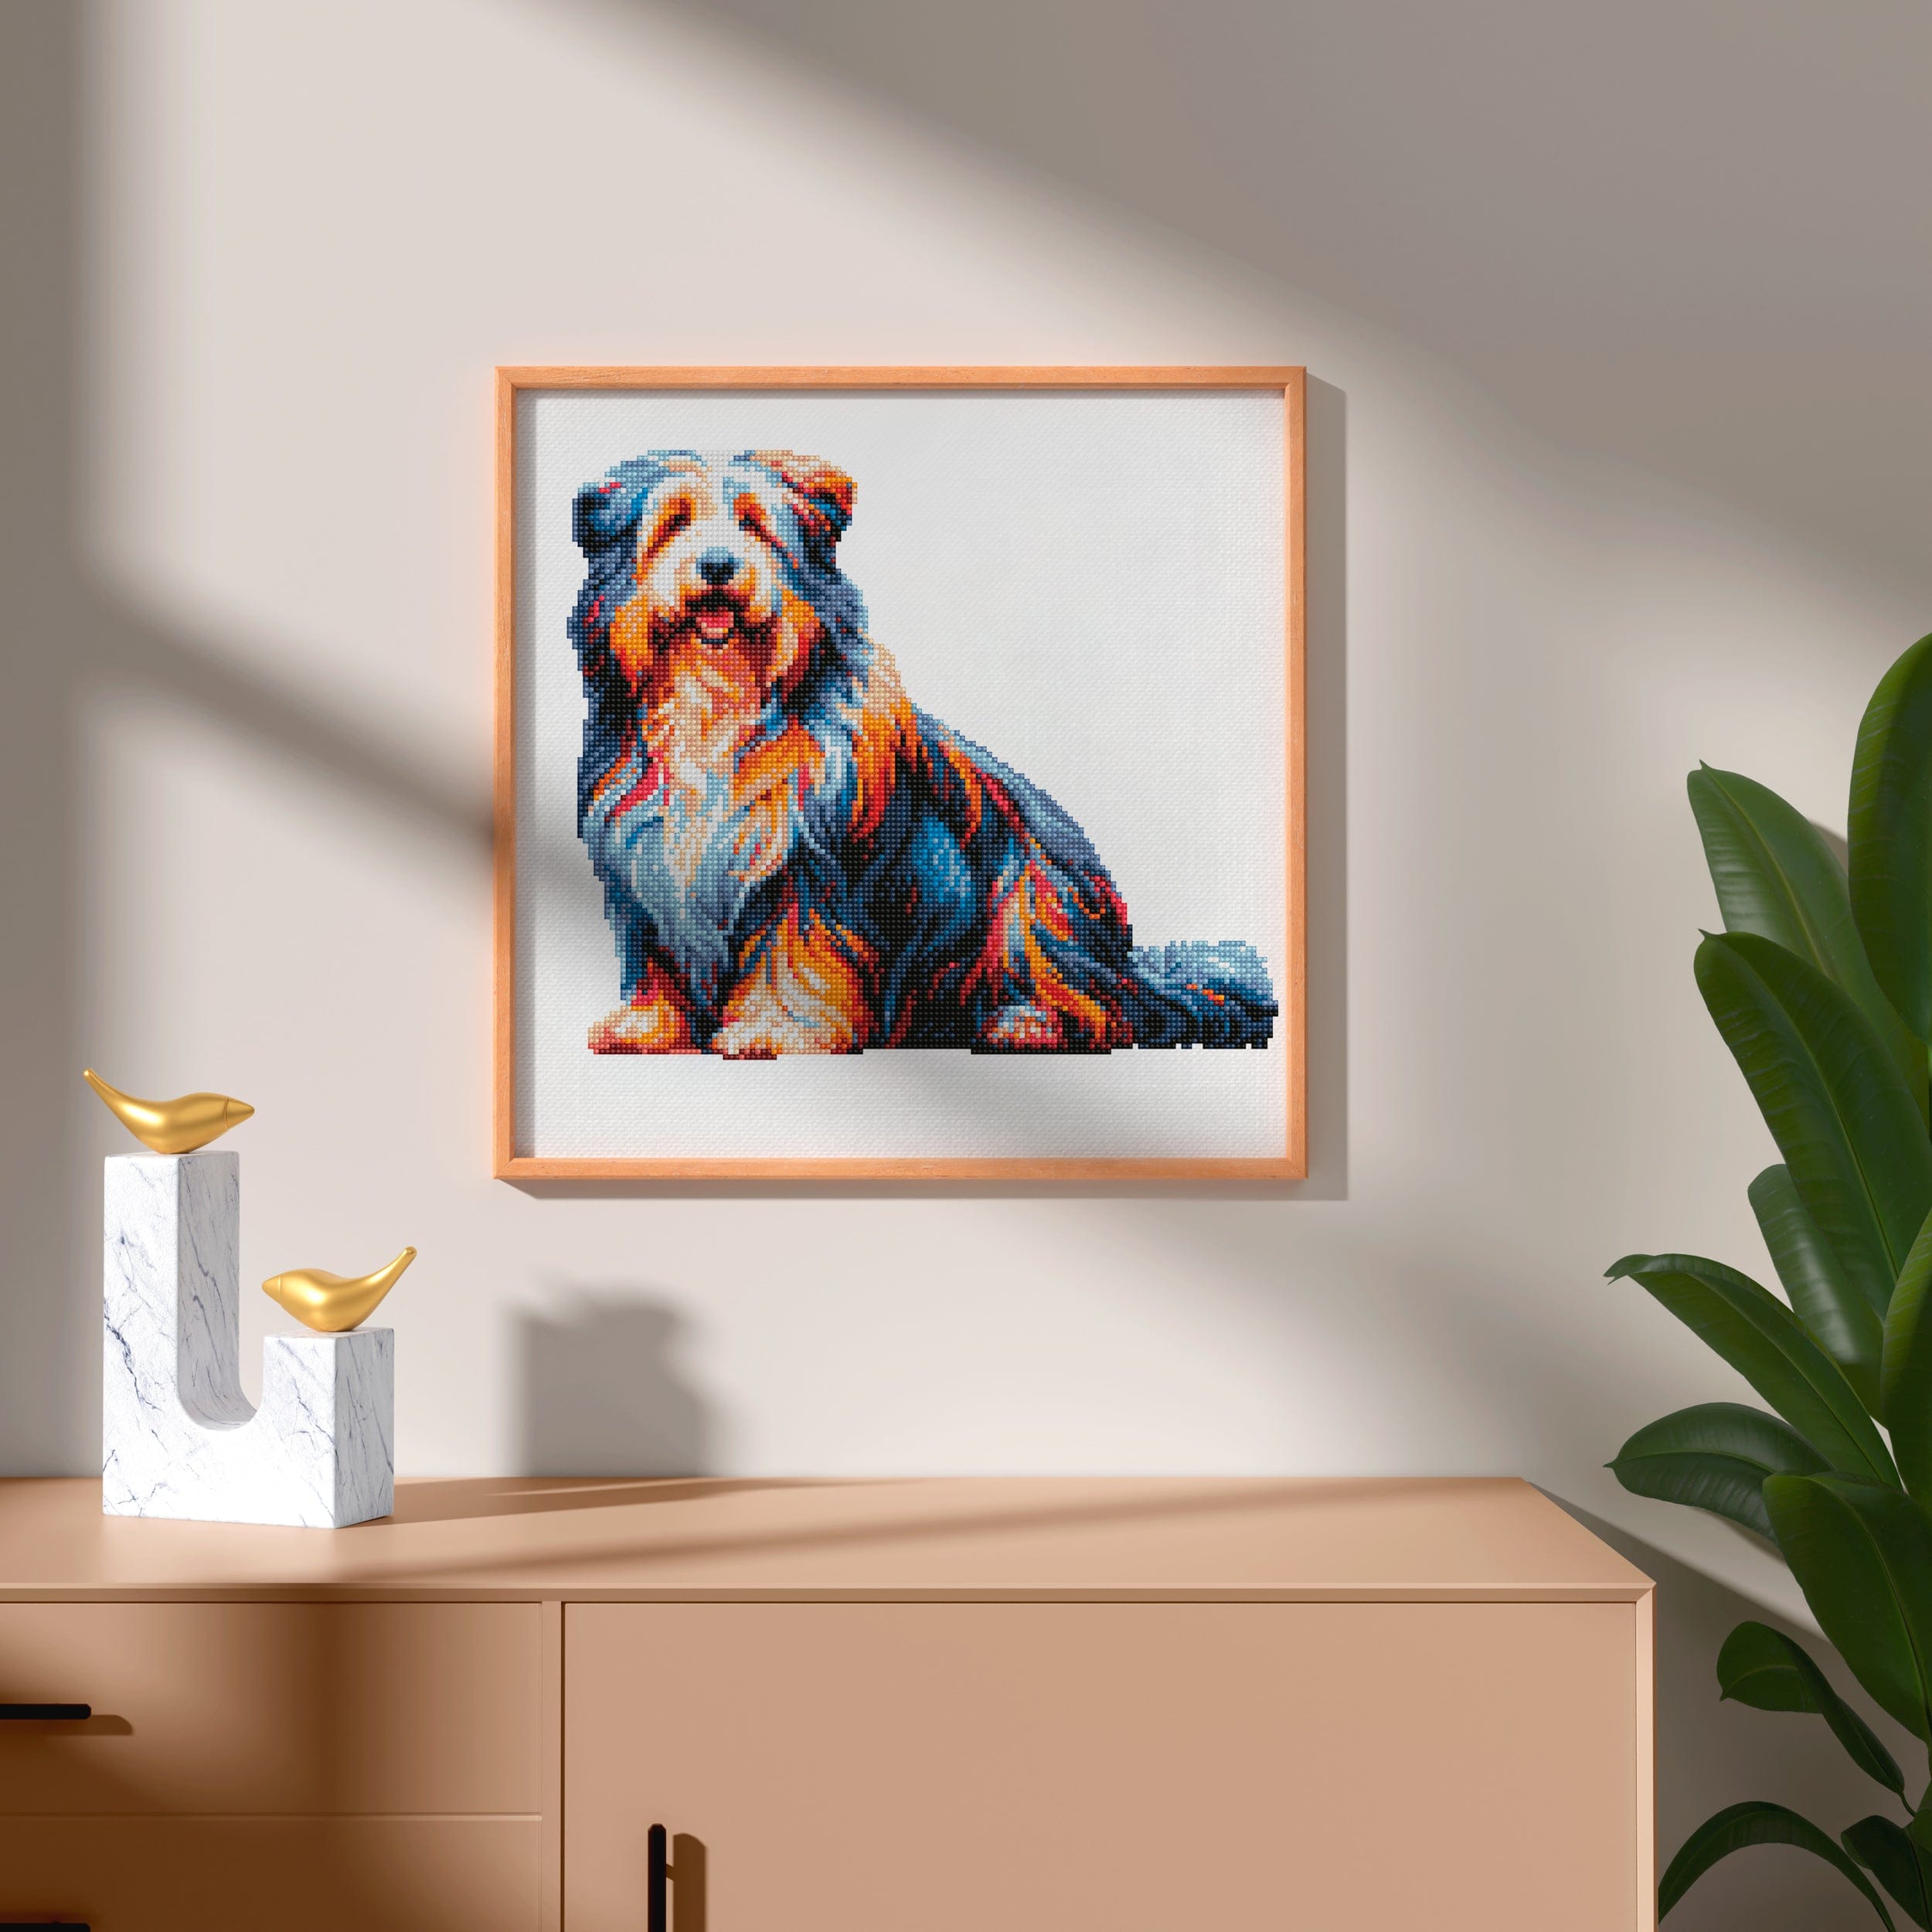 15.7"x15.7" / 40cm x 40cm Bearded Collie Dog - Diamond Painting Kit